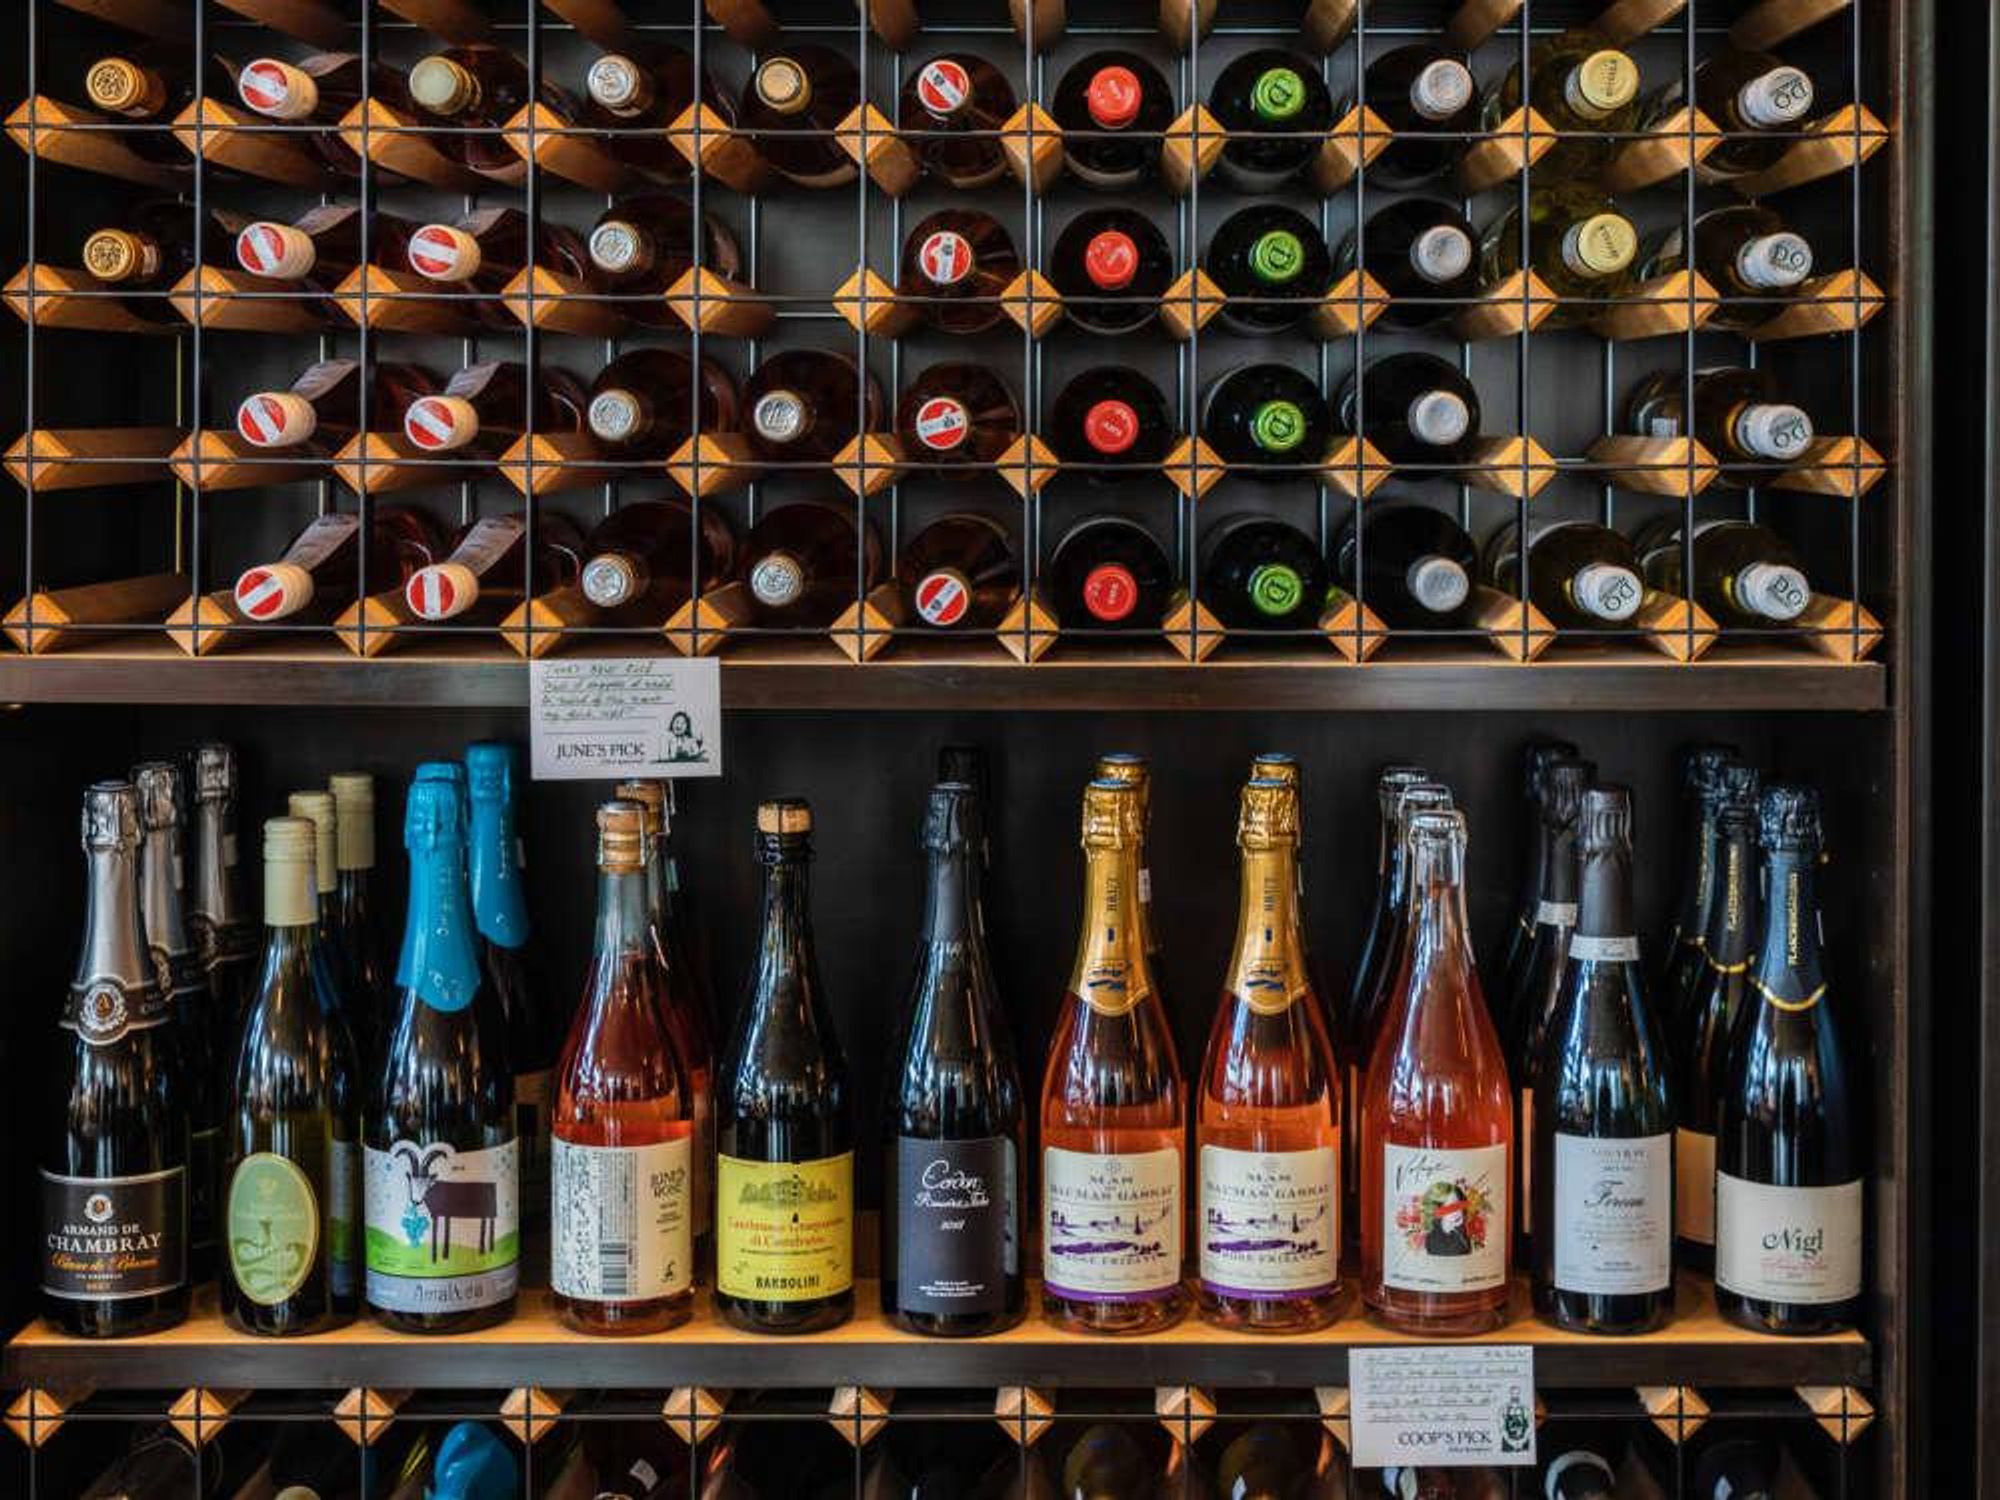 Montrose Cheese & Wine bottles on a shelf